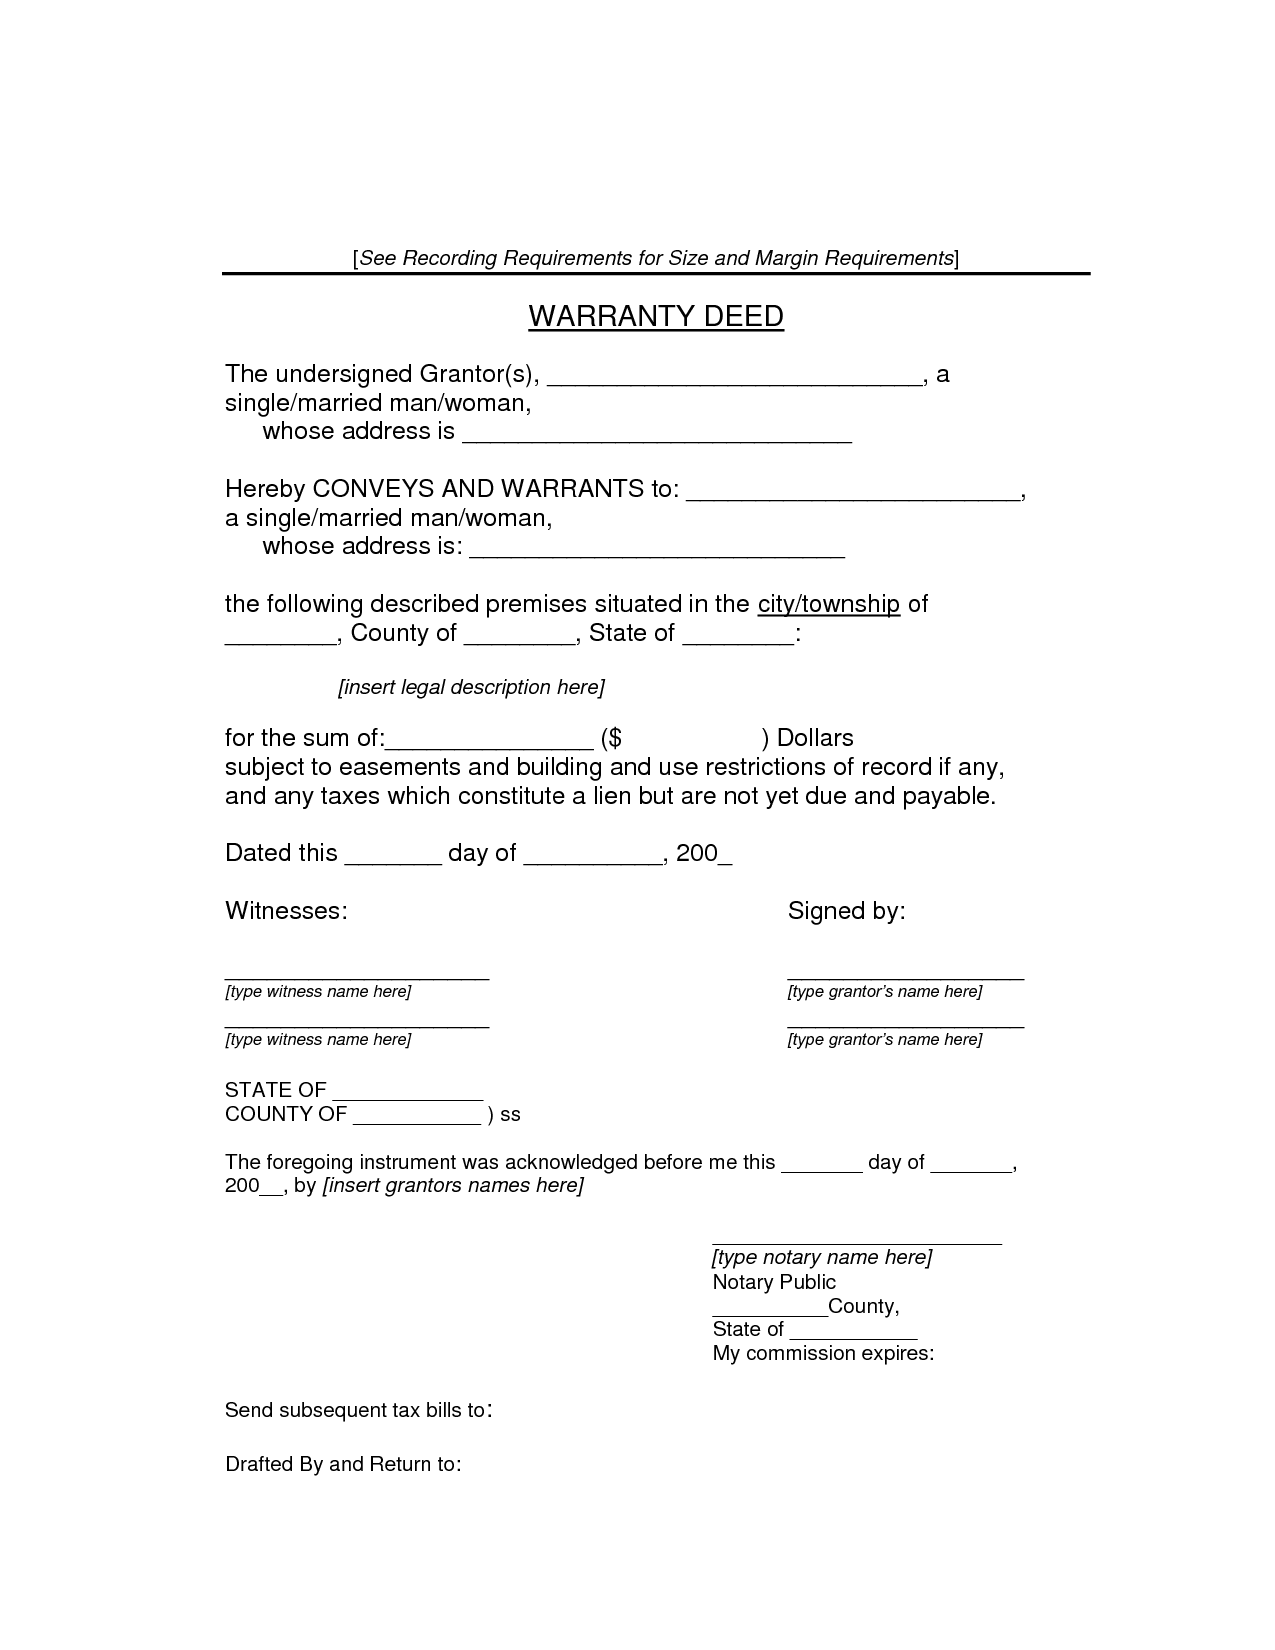 general-warranty-deed-sample-free-printable-documents